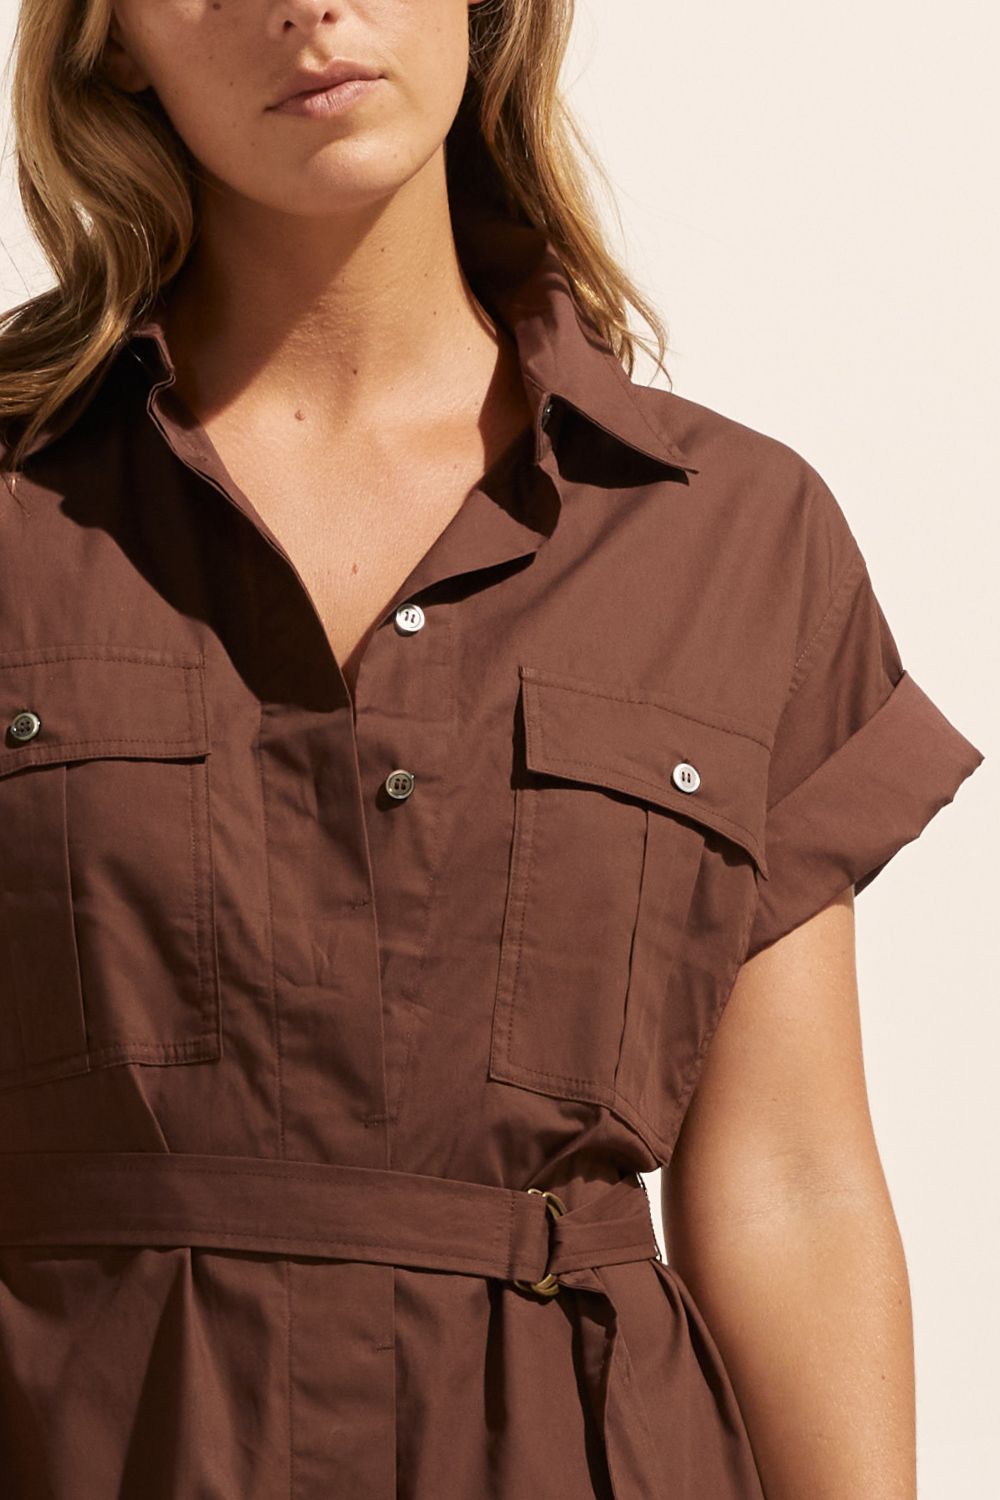 brown, midi dress, fabric belt, button down, cuffed short sleeve, collar, dress, side splits, close up image